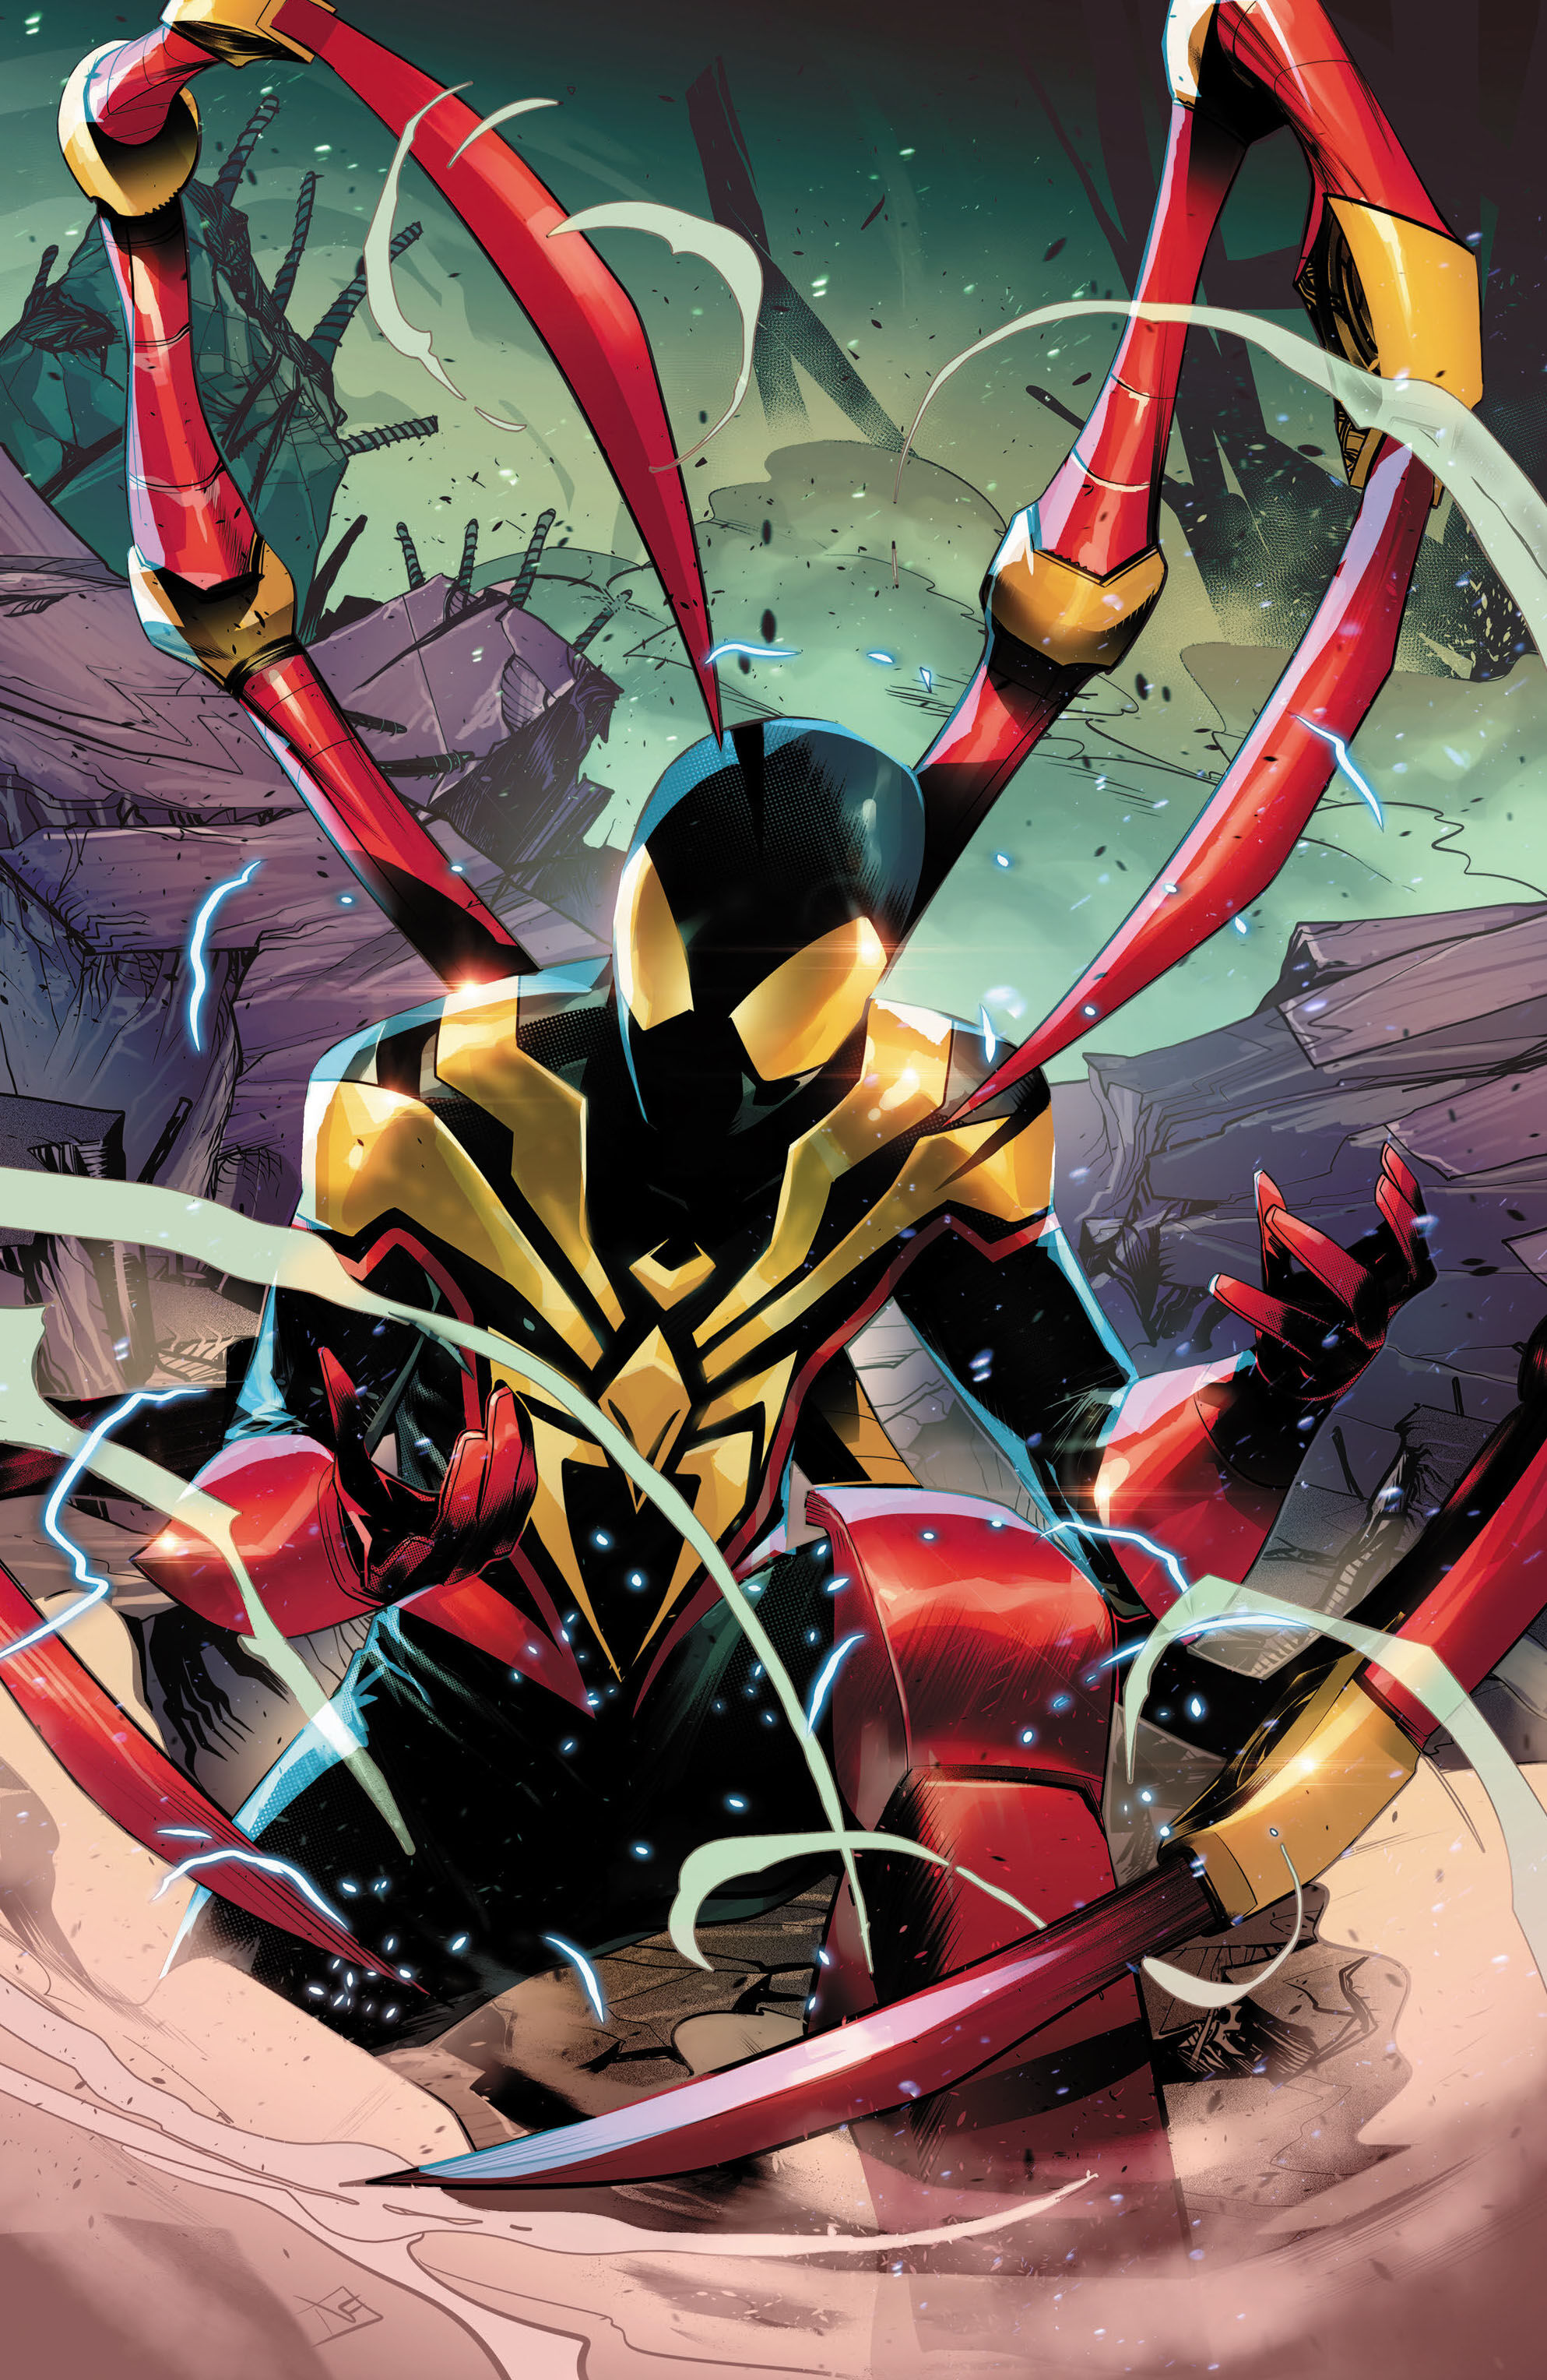 Miles Morales: Homem-Aranha Vol. 6, HQ / Quadrinhos